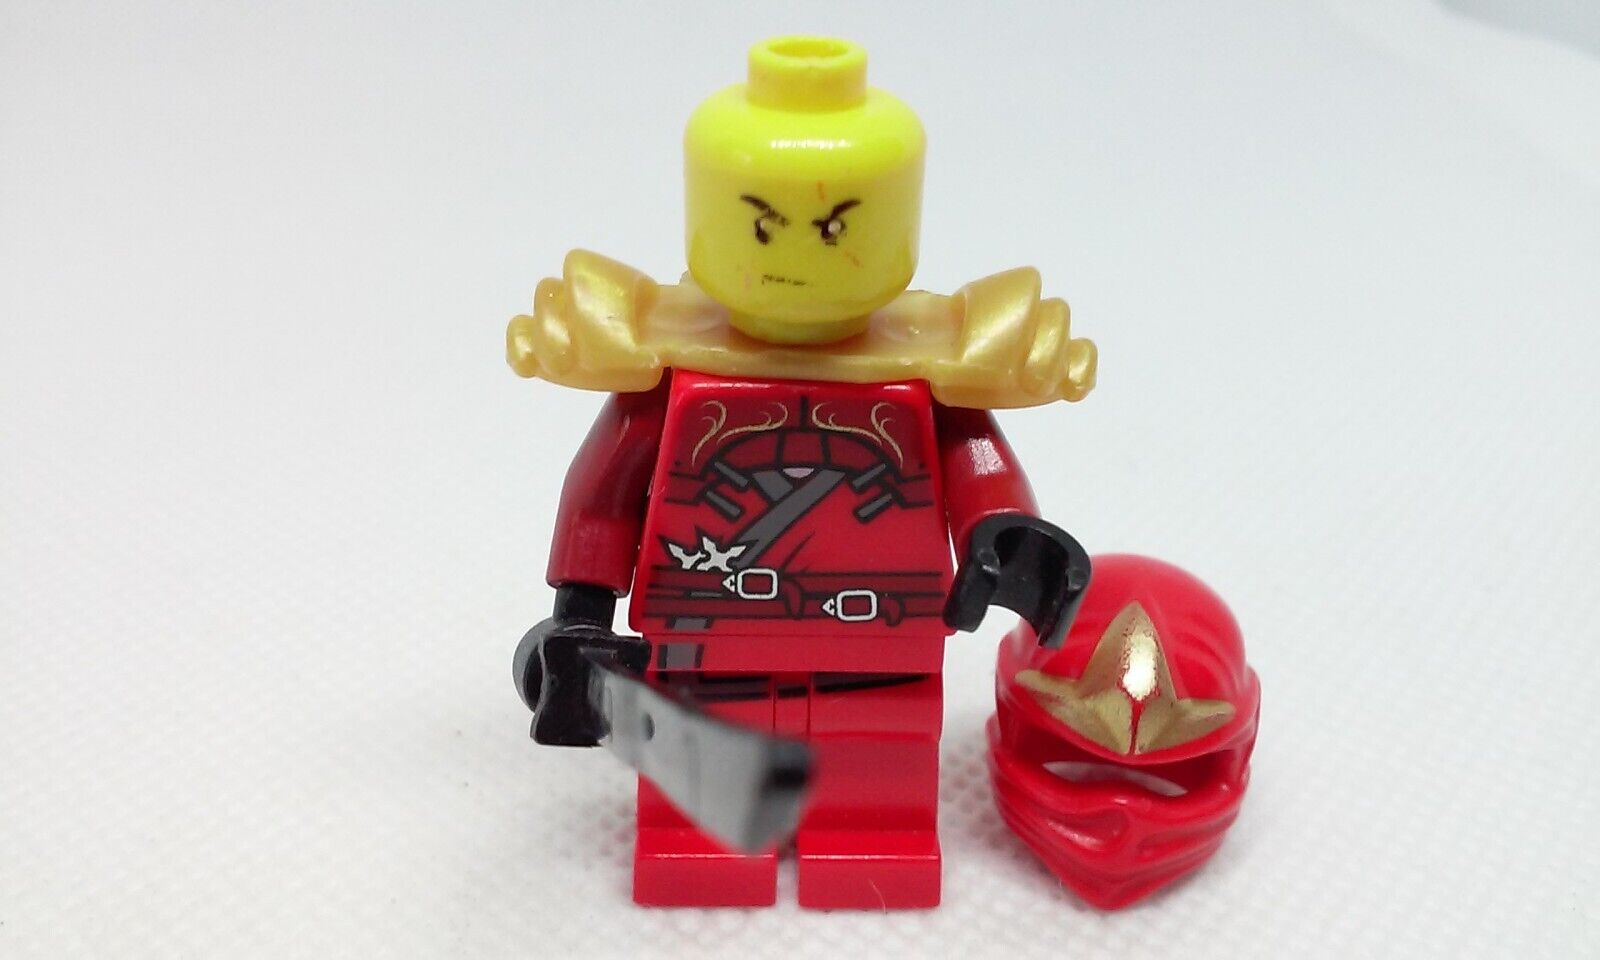 Lego Ninjago Kai ZX Red Ninja #9446 with Armor Authentic Minifigure